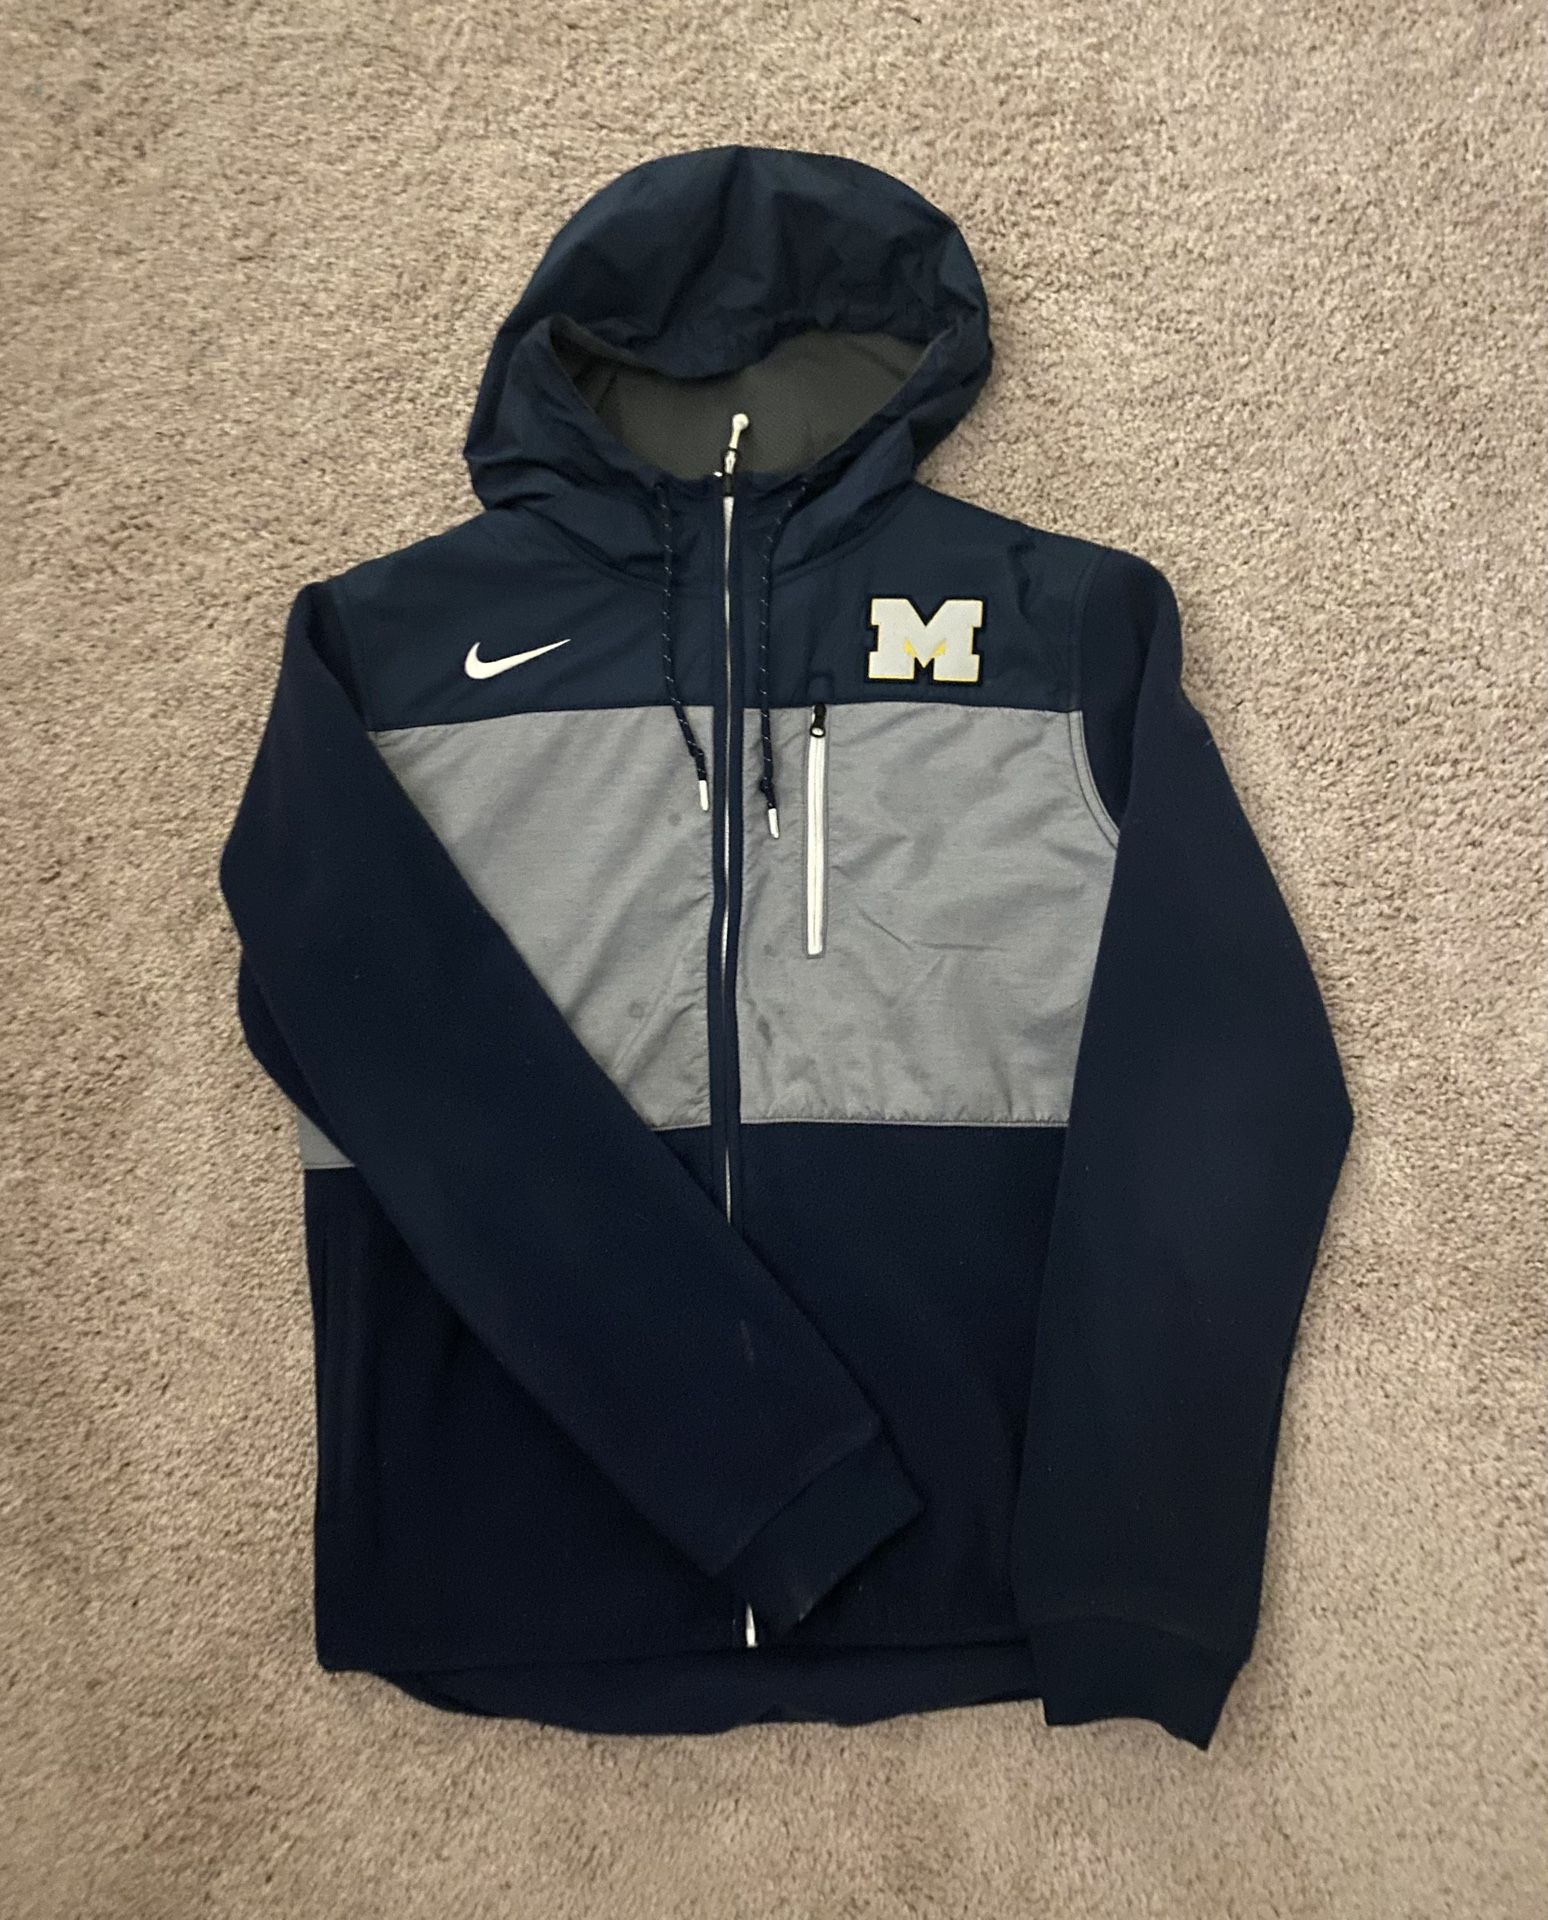 Michigan Nike Zip up